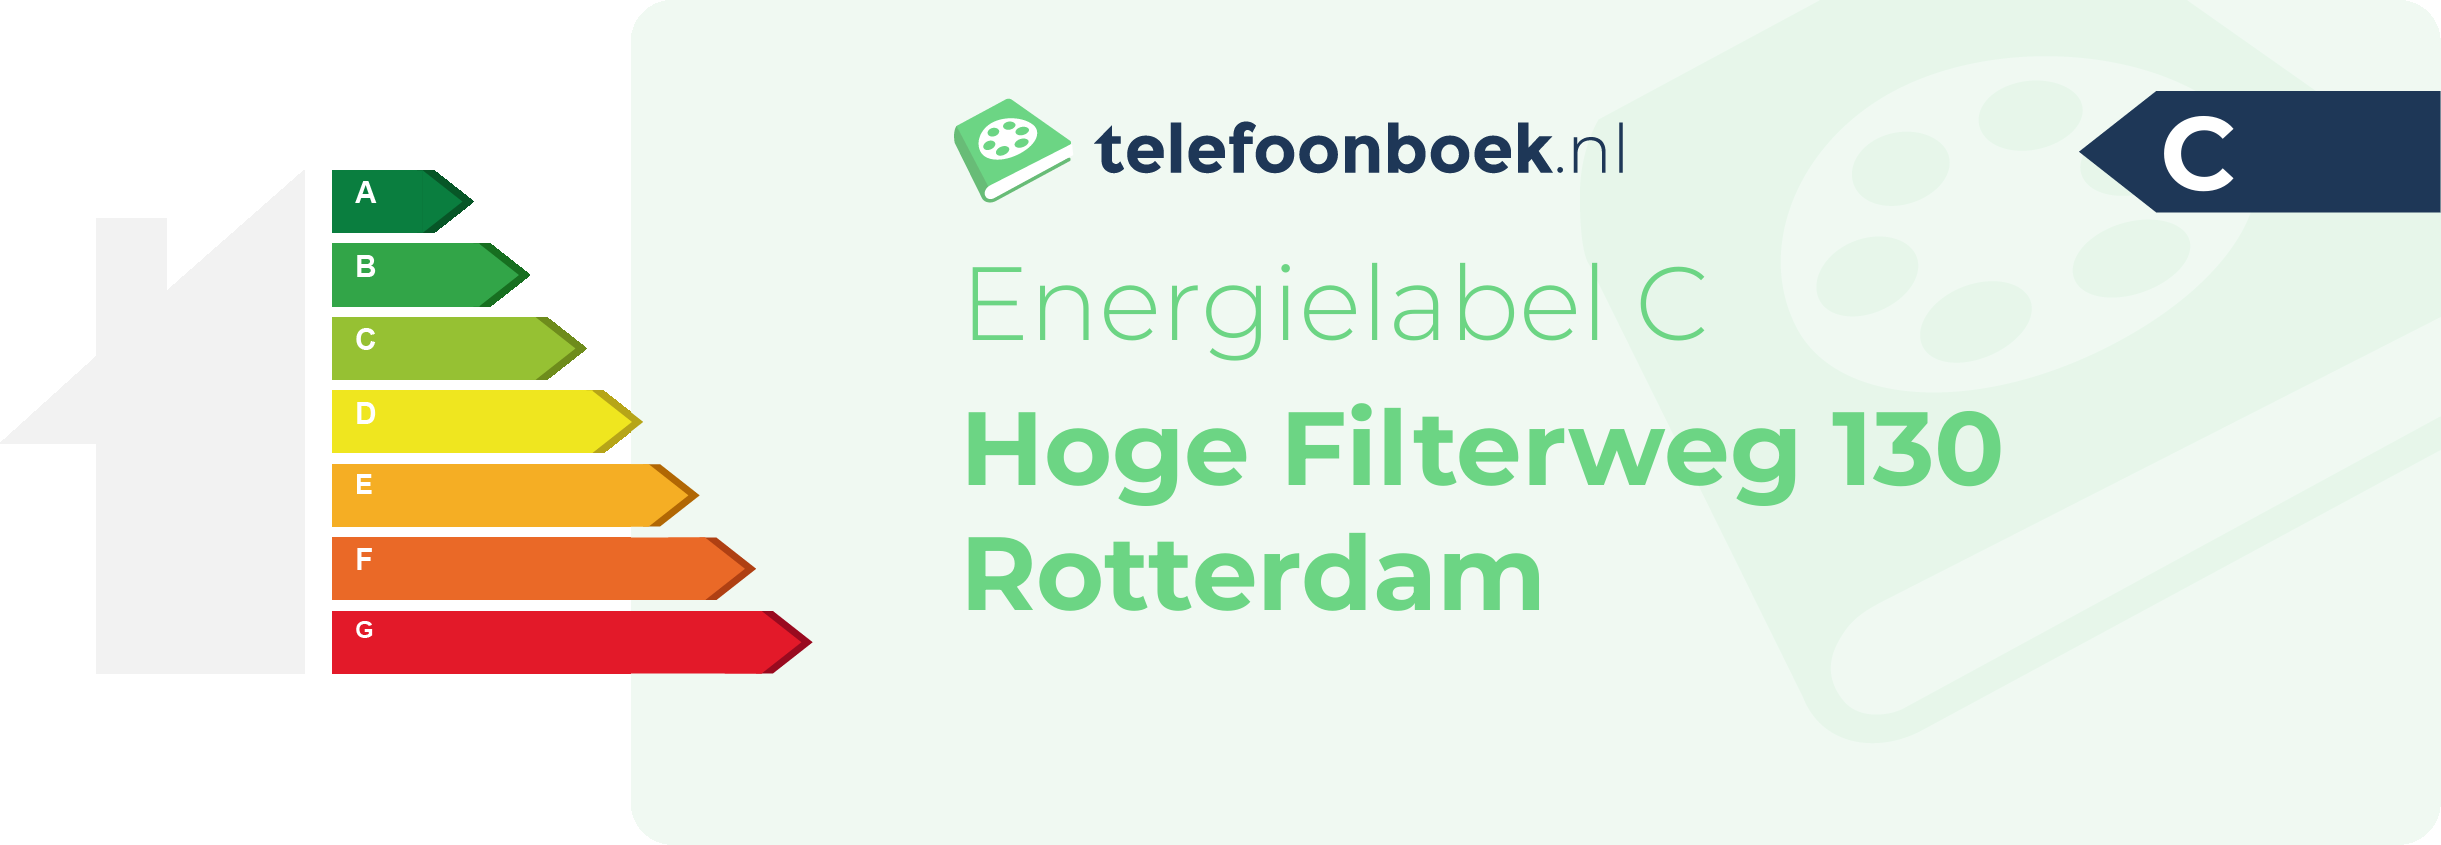 Energielabel Hoge Filterweg 130 Rotterdam